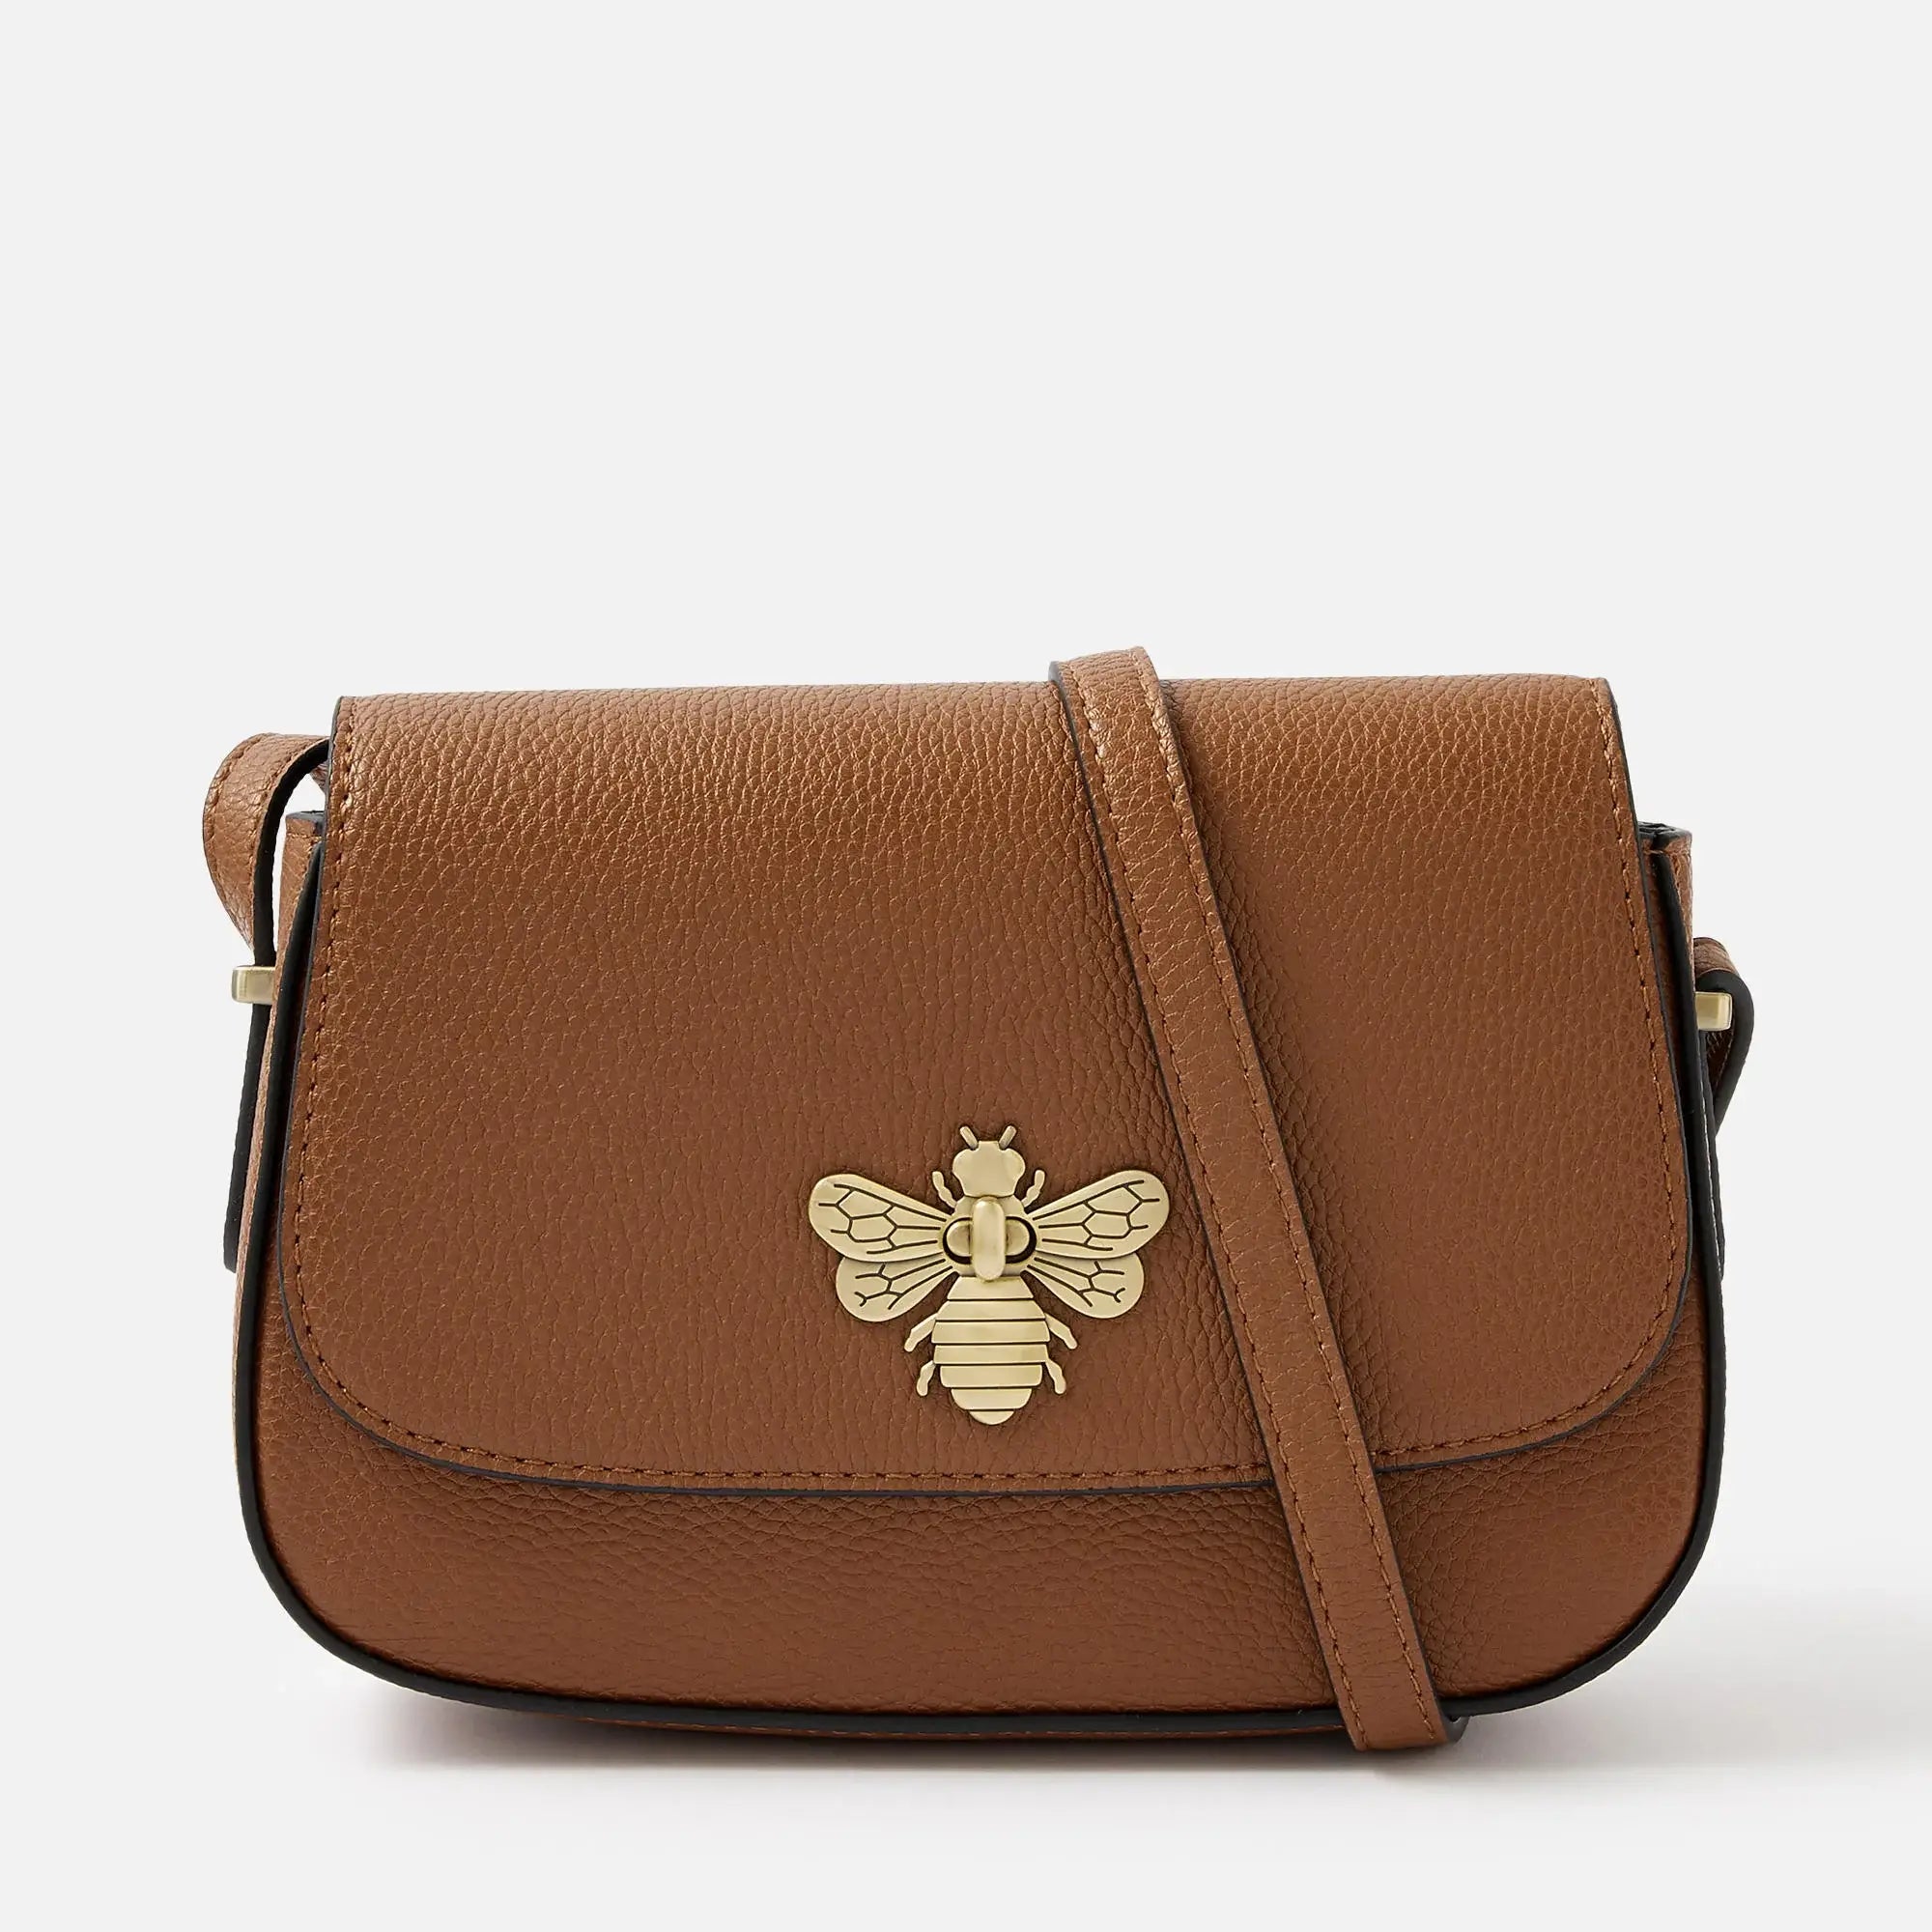 Affordable Bag Brands: Luxury Designer Handbags To Know